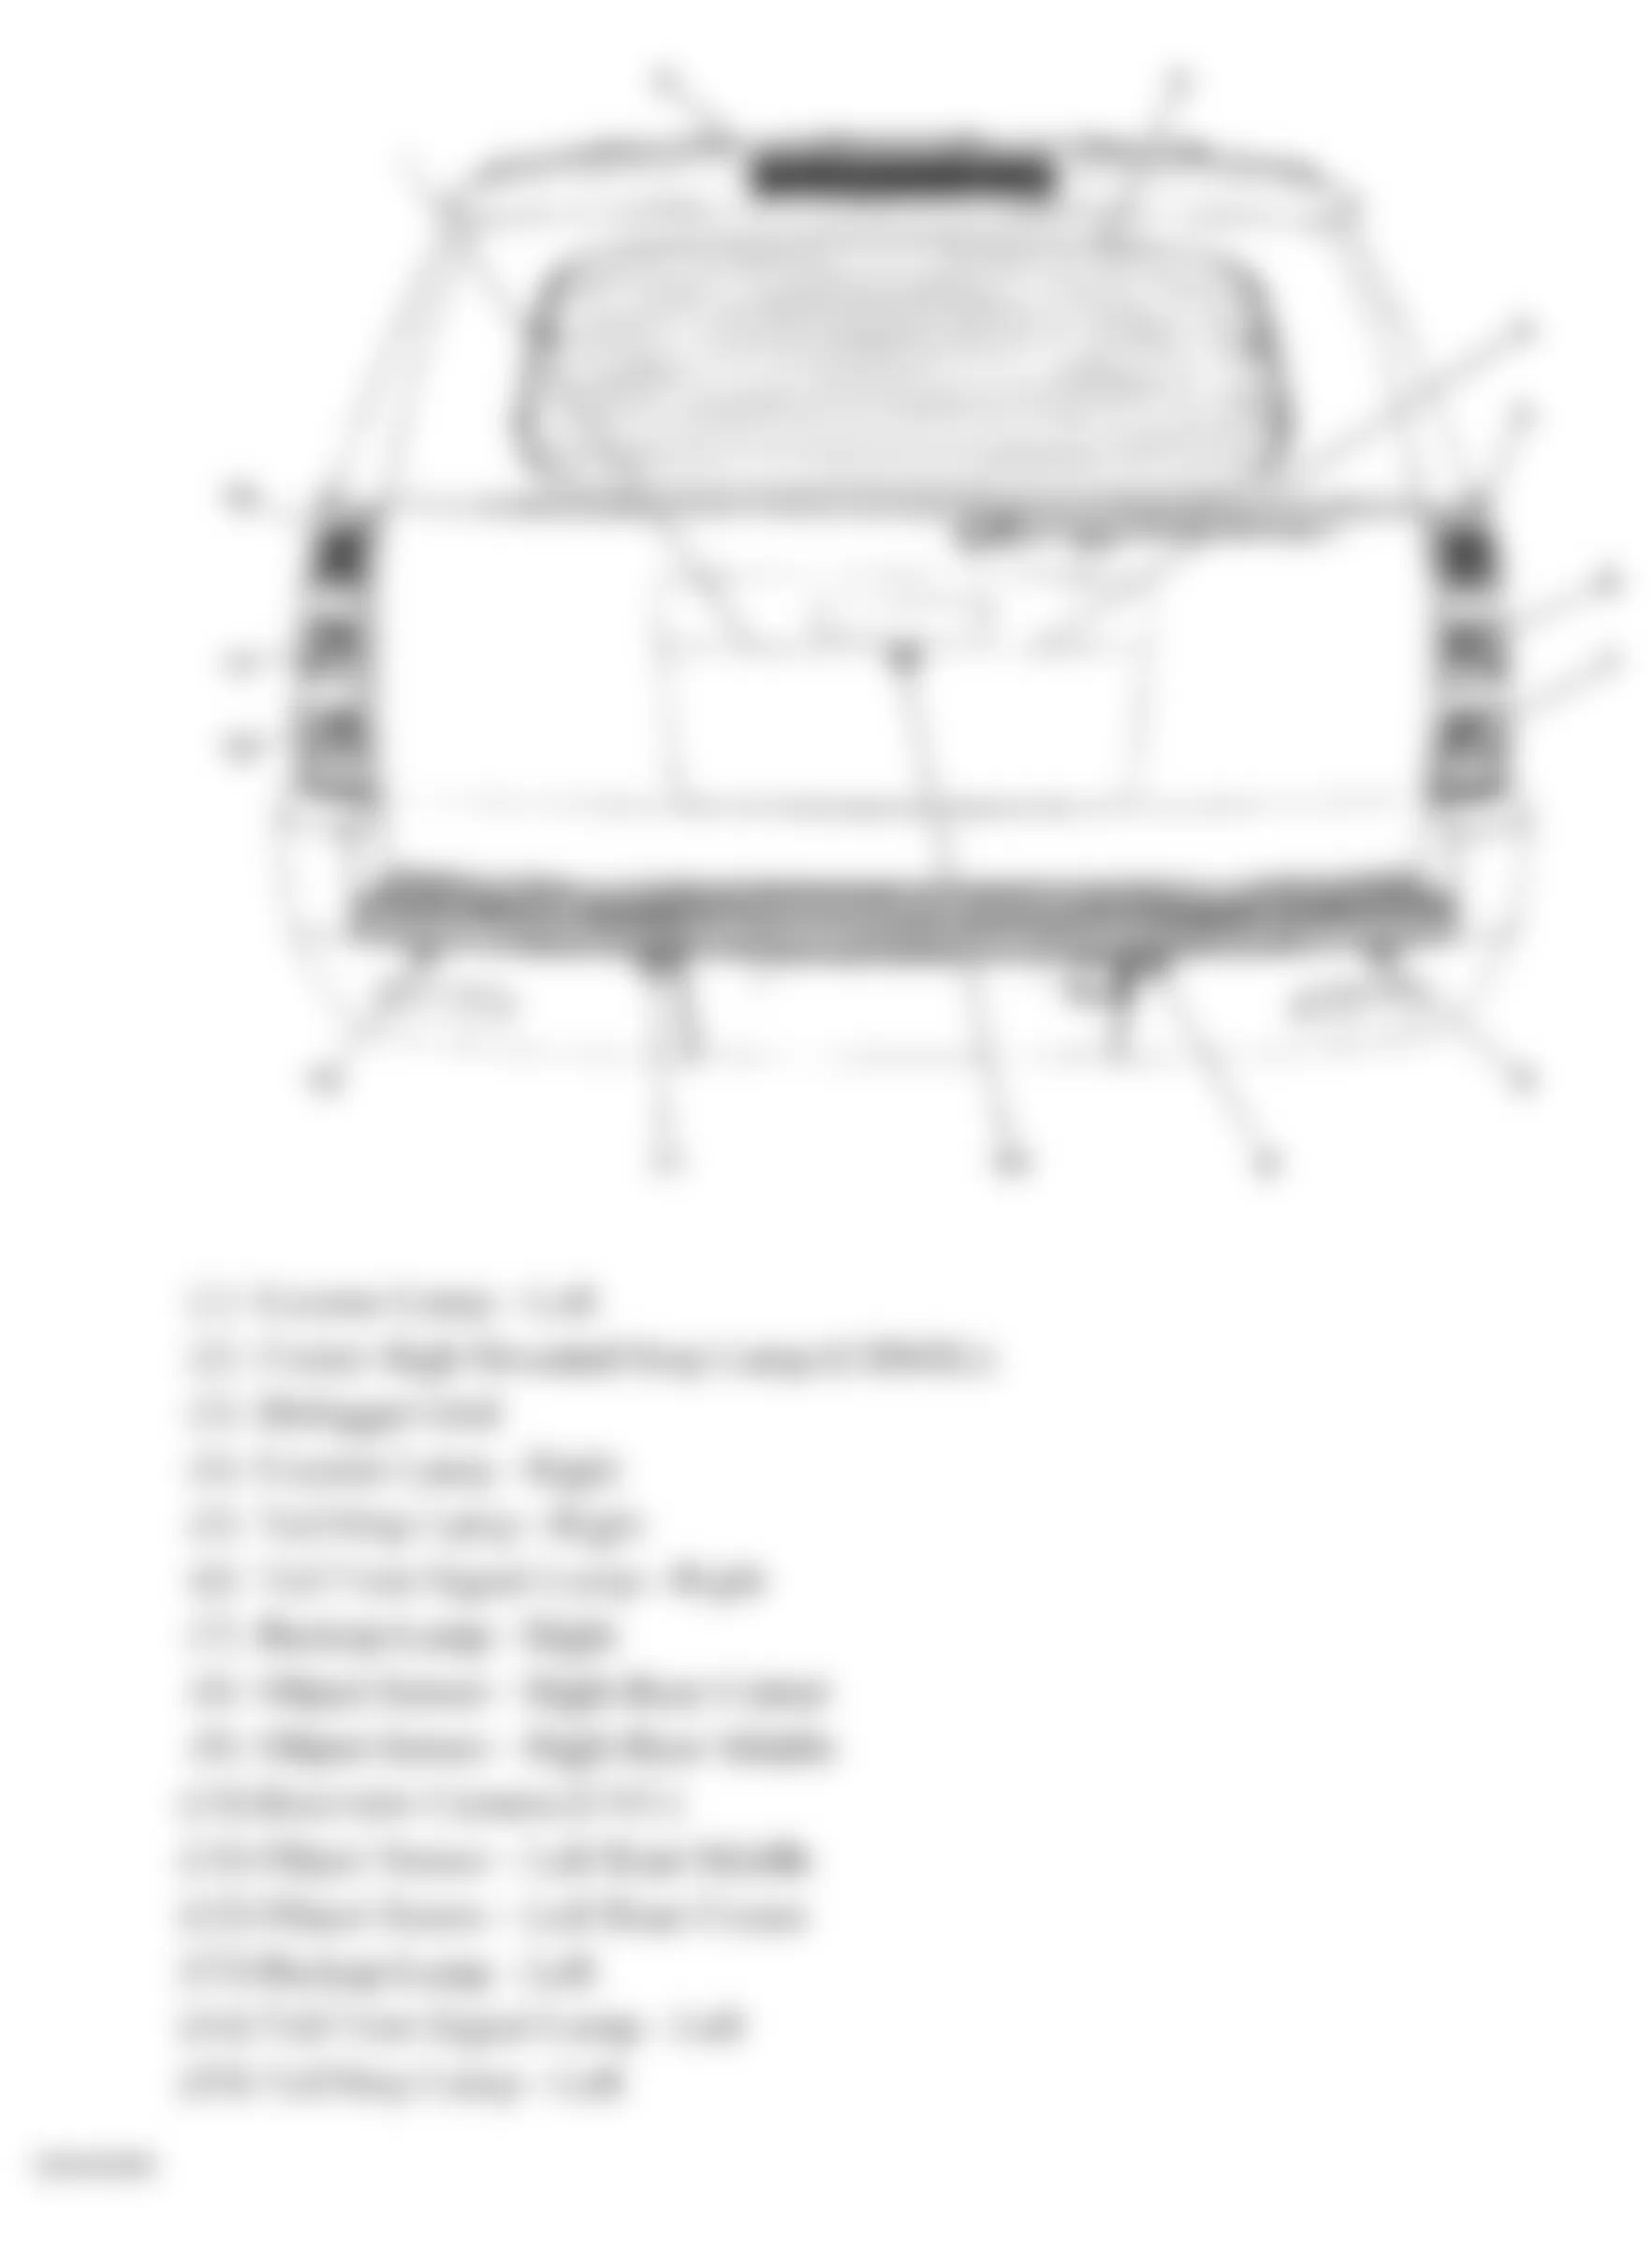 GMC Yukon XL C1500 2007 - Component Locations -  Rear Of Vehicle (Yukon W/One Piece Liftgate)